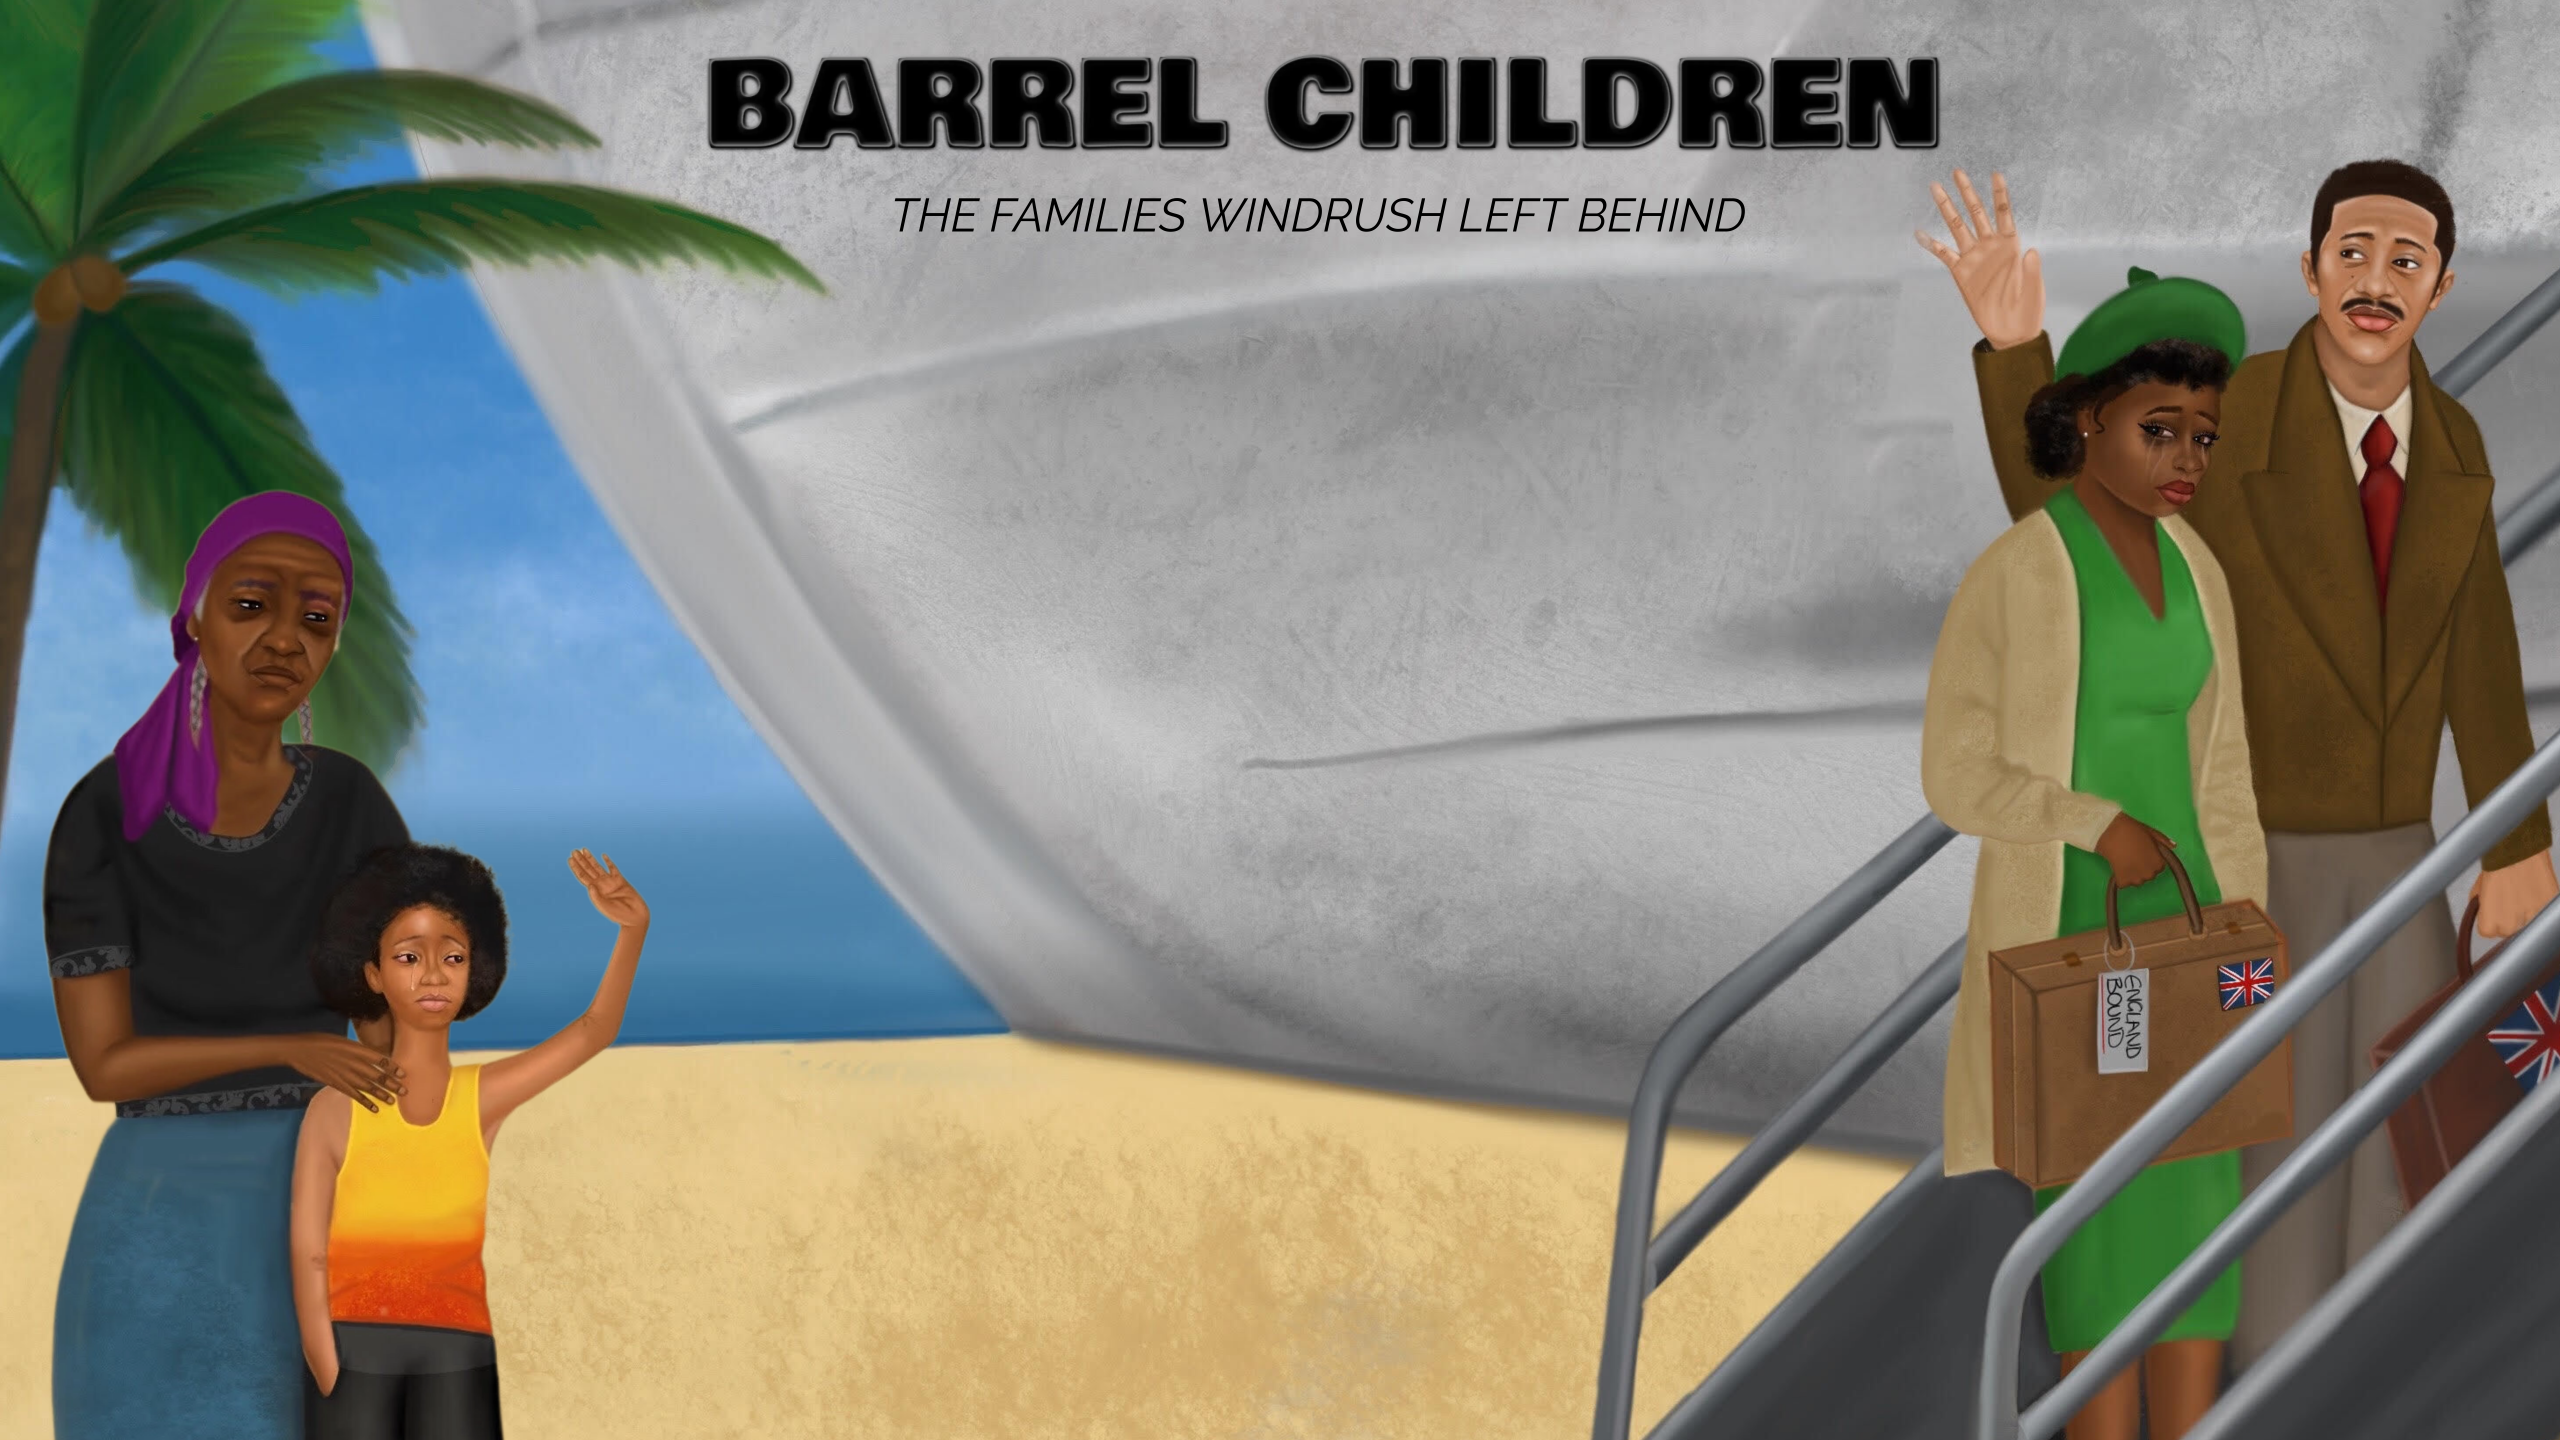 ‘Barrel Child’ artwork by Kirsty ‘Kirzart’ Latoya